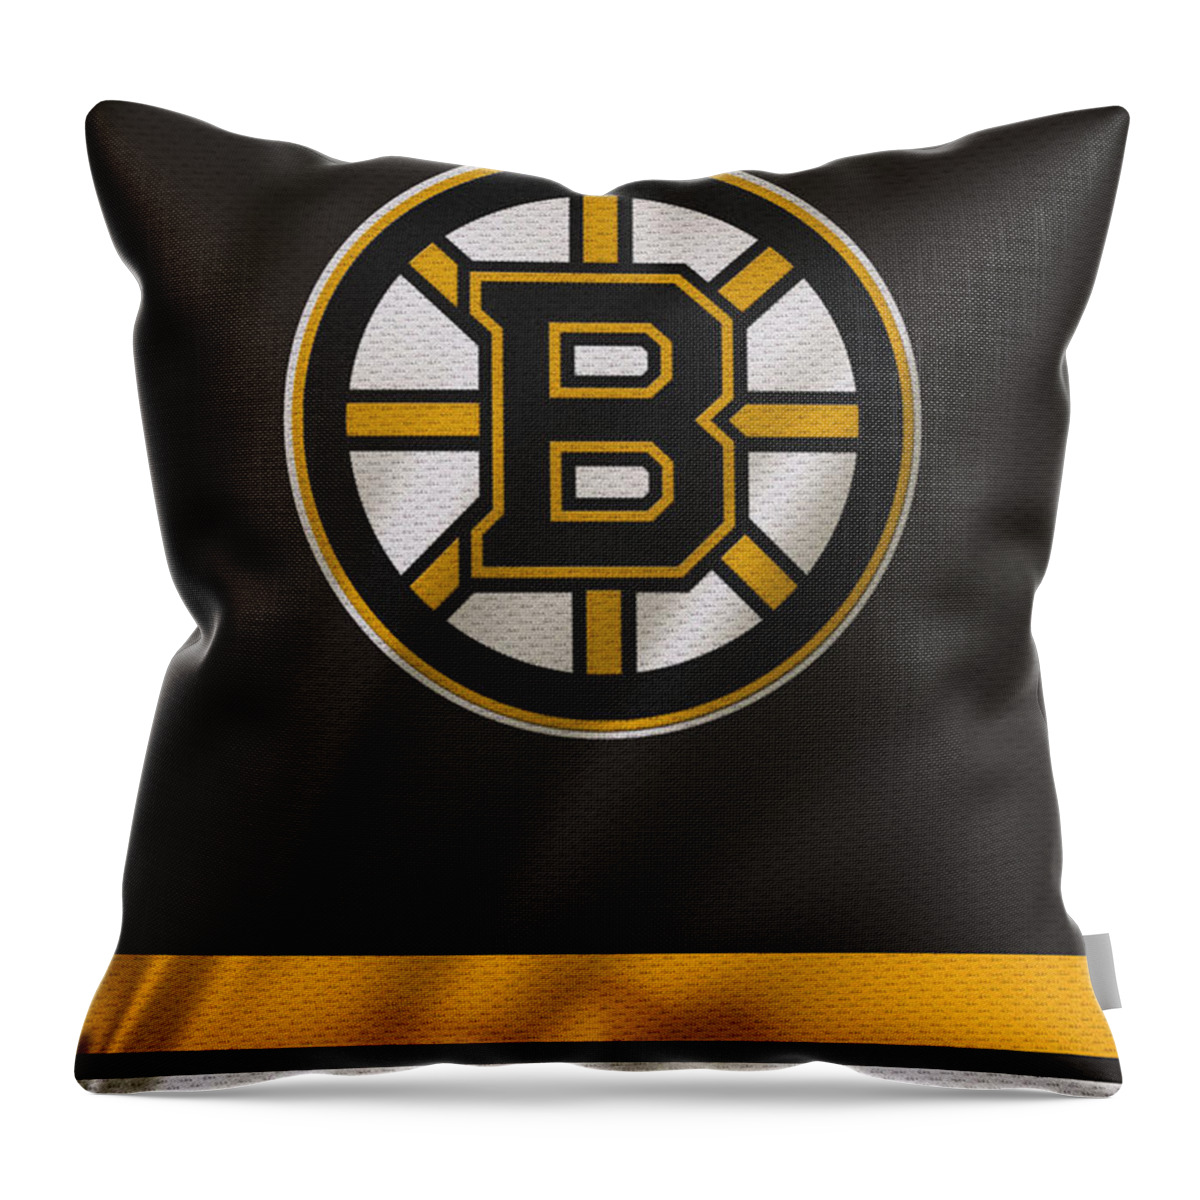 Bruins Throw Pillow featuring the photograph Boston Bruins Uniform by Joe Hamilton